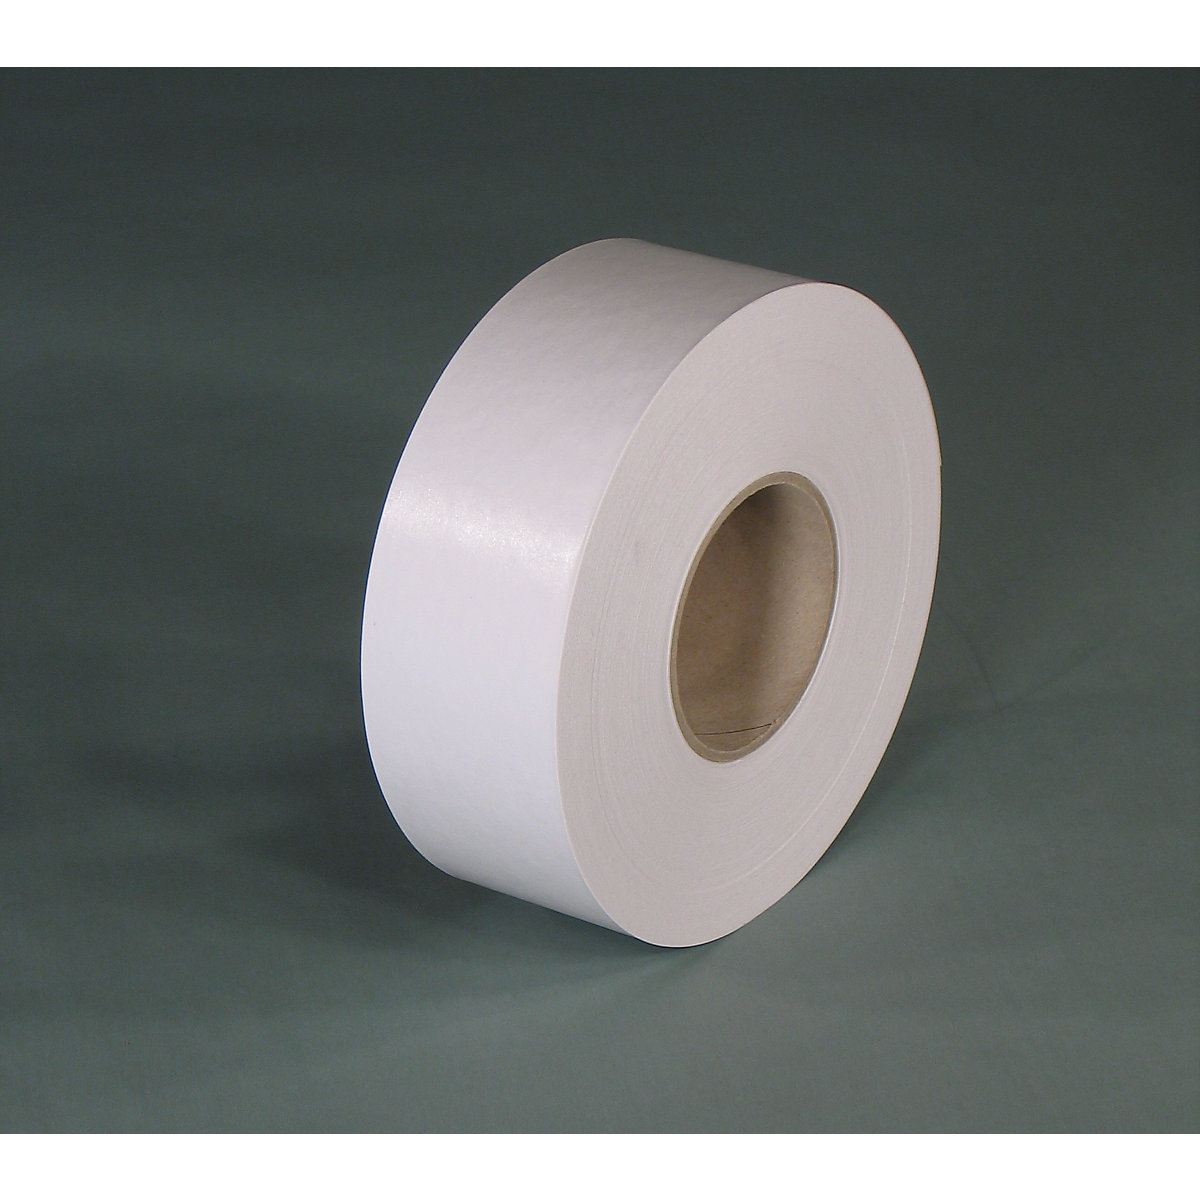 Cinta adhesiva en húmedo – eurokraft basic, modelo sencillo, UE 12 rollos, blanco, anchura de cinta 60 mm-2